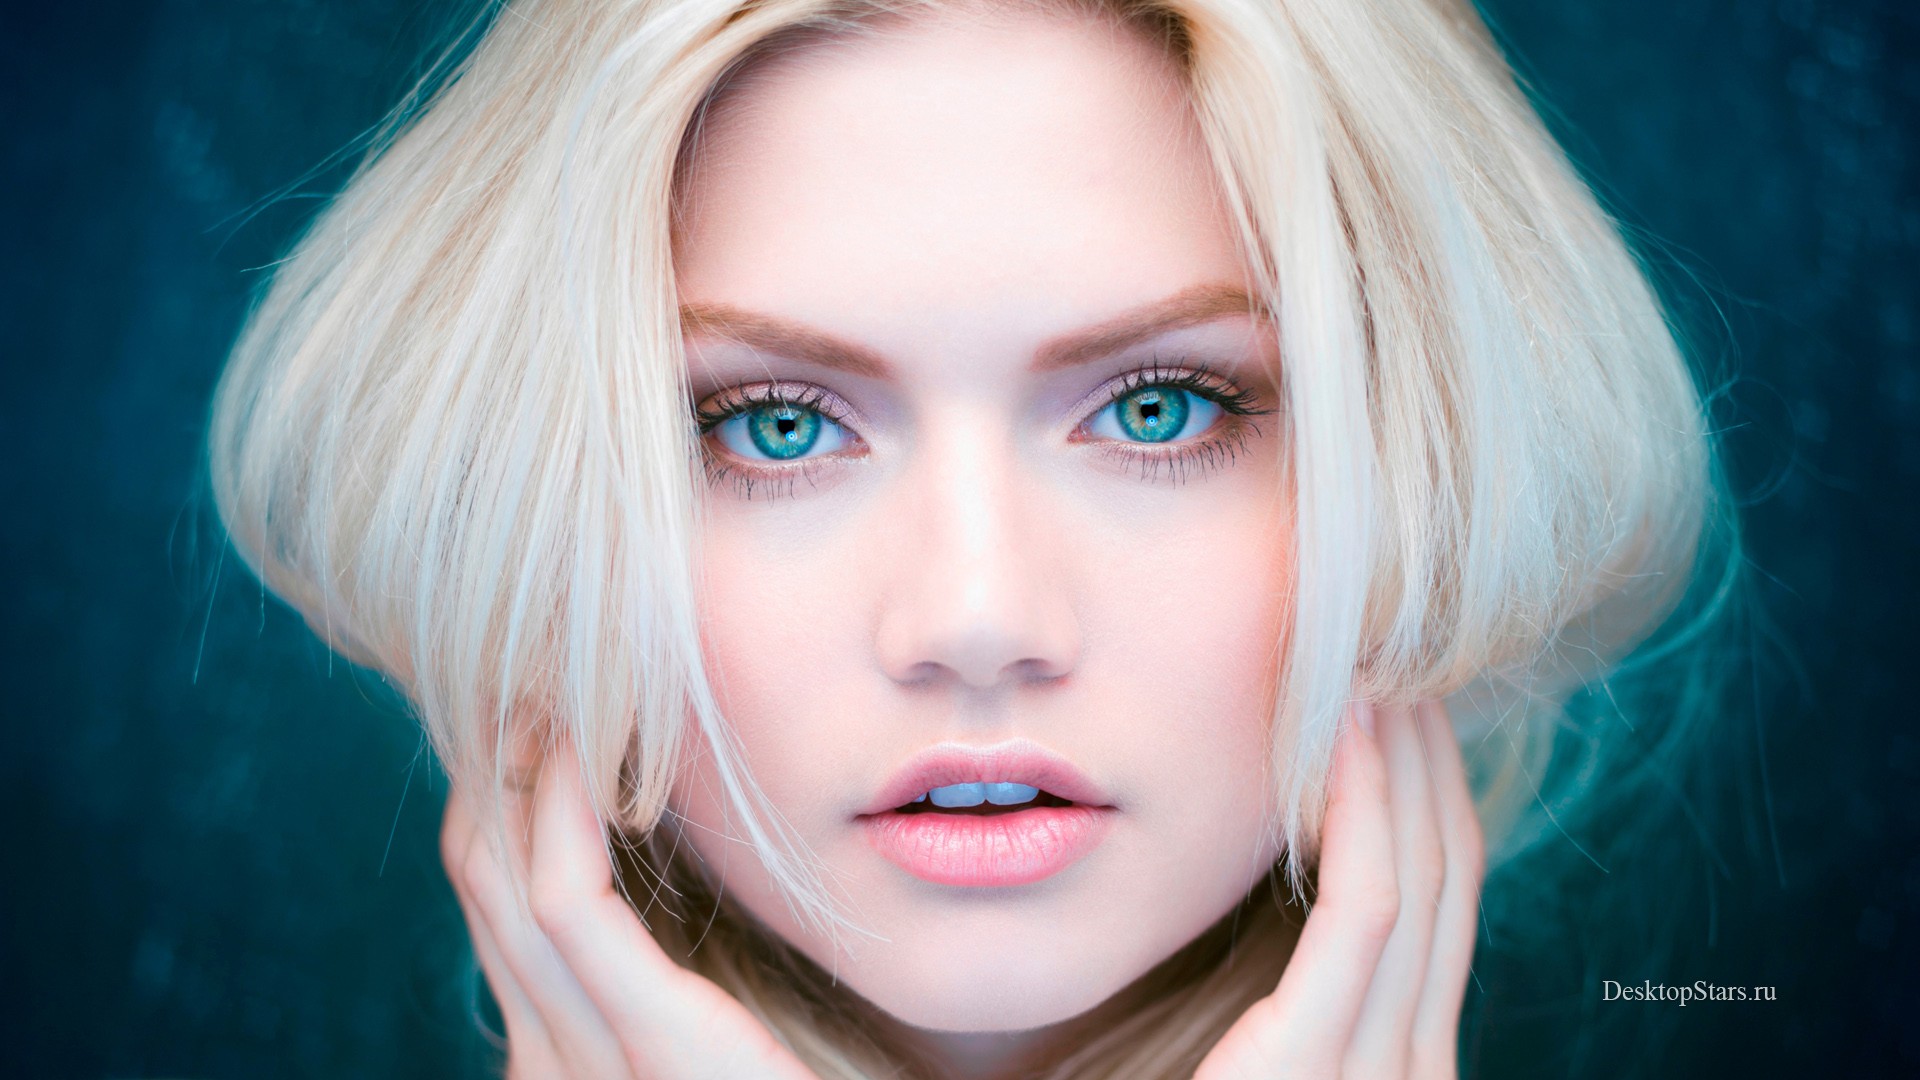 Martina Dimitrova Blonde Model Bulgaria Face Closeup Green Eyes Women Touching Hair Photoshop 1920x1080